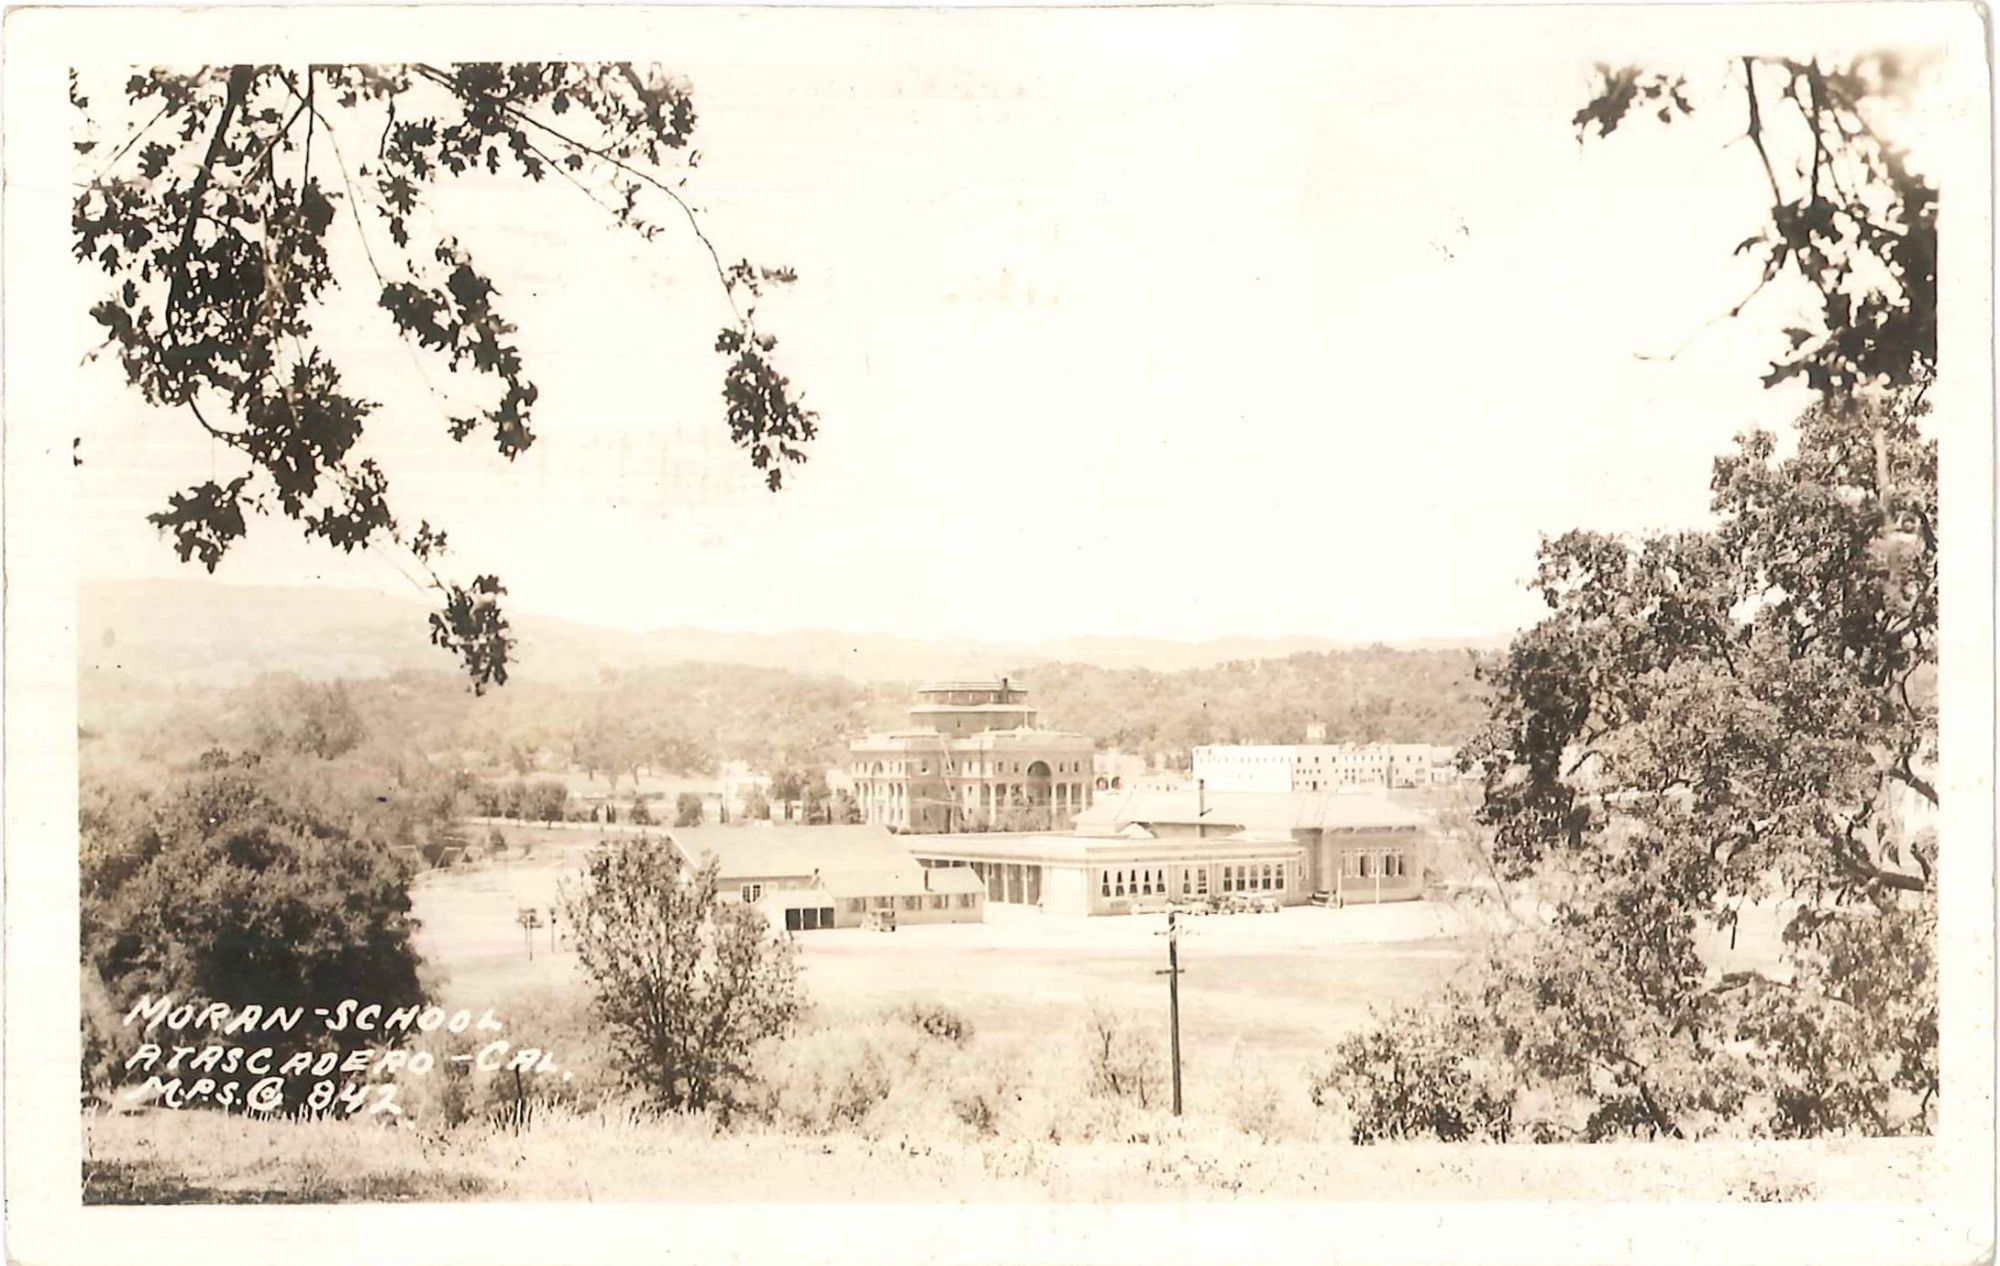 Postcard showing Moran Preparatory School, Atascadero, California